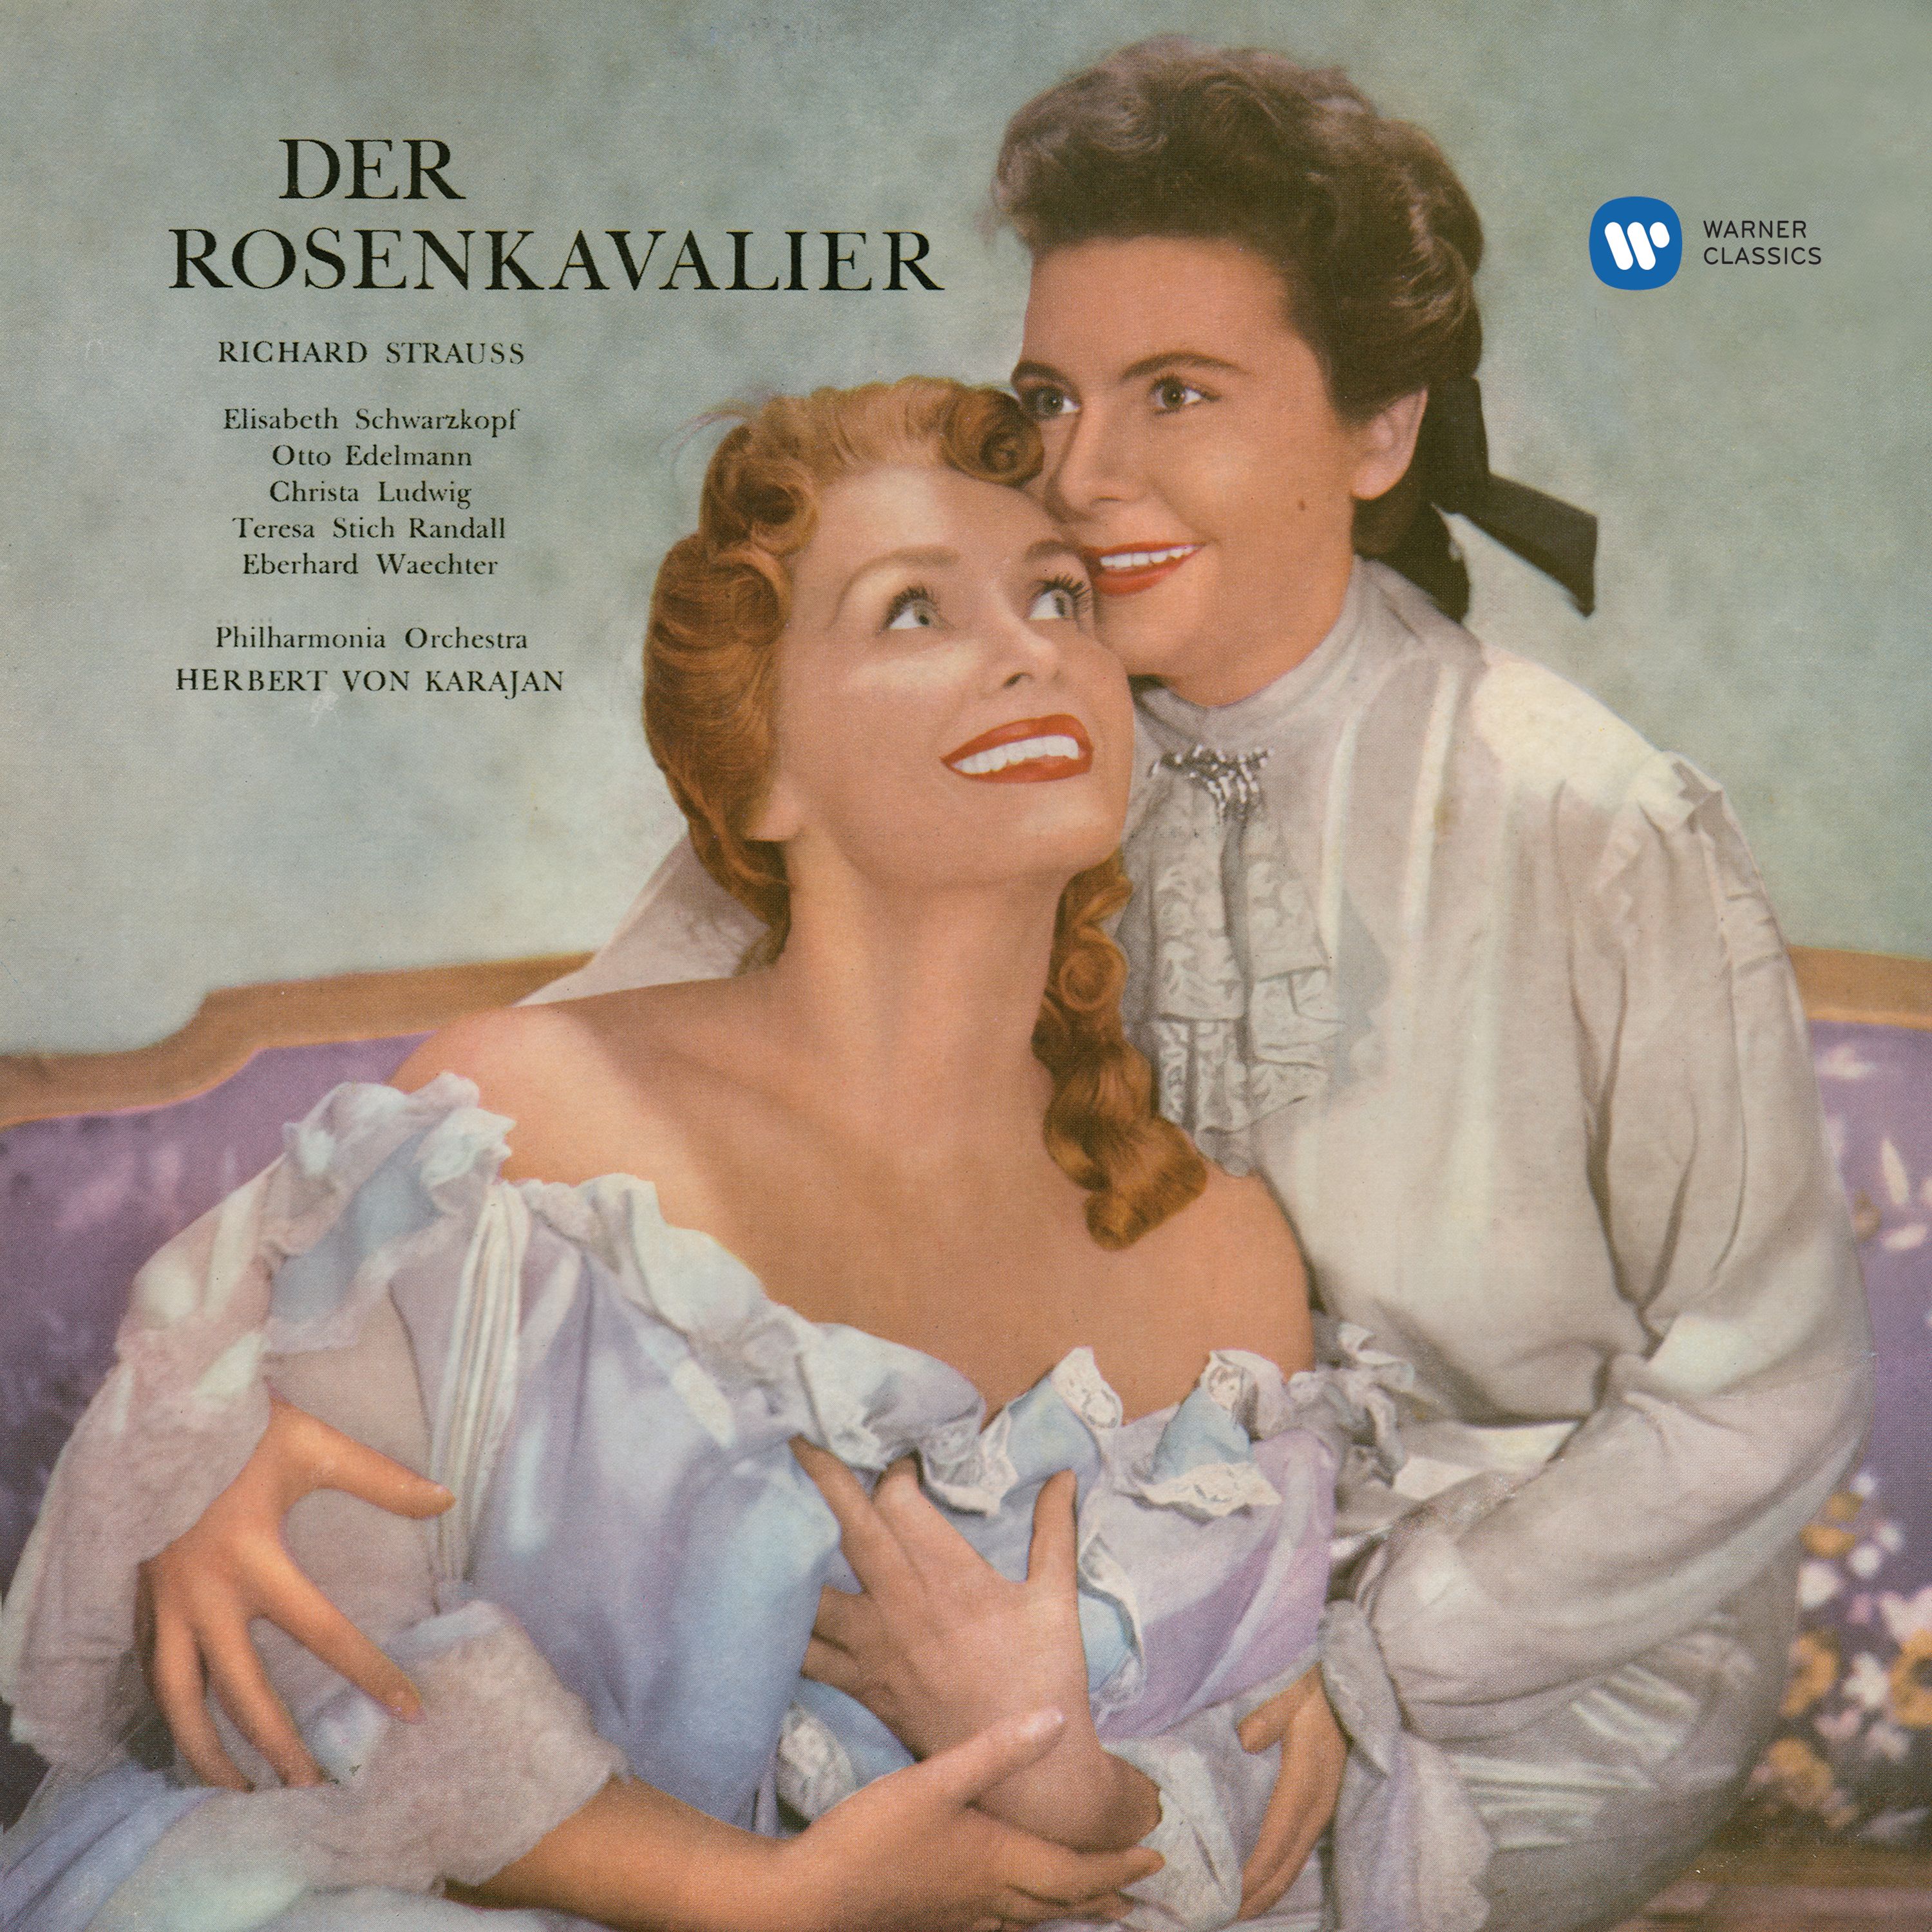 Der Rosenkavalier, Op. 59, Act 3: "Leupold, wir geh'n" (Ochs, Annina, Children, Waiter, Landlord, Valzacchi, Musicians, Coachman, Servant)